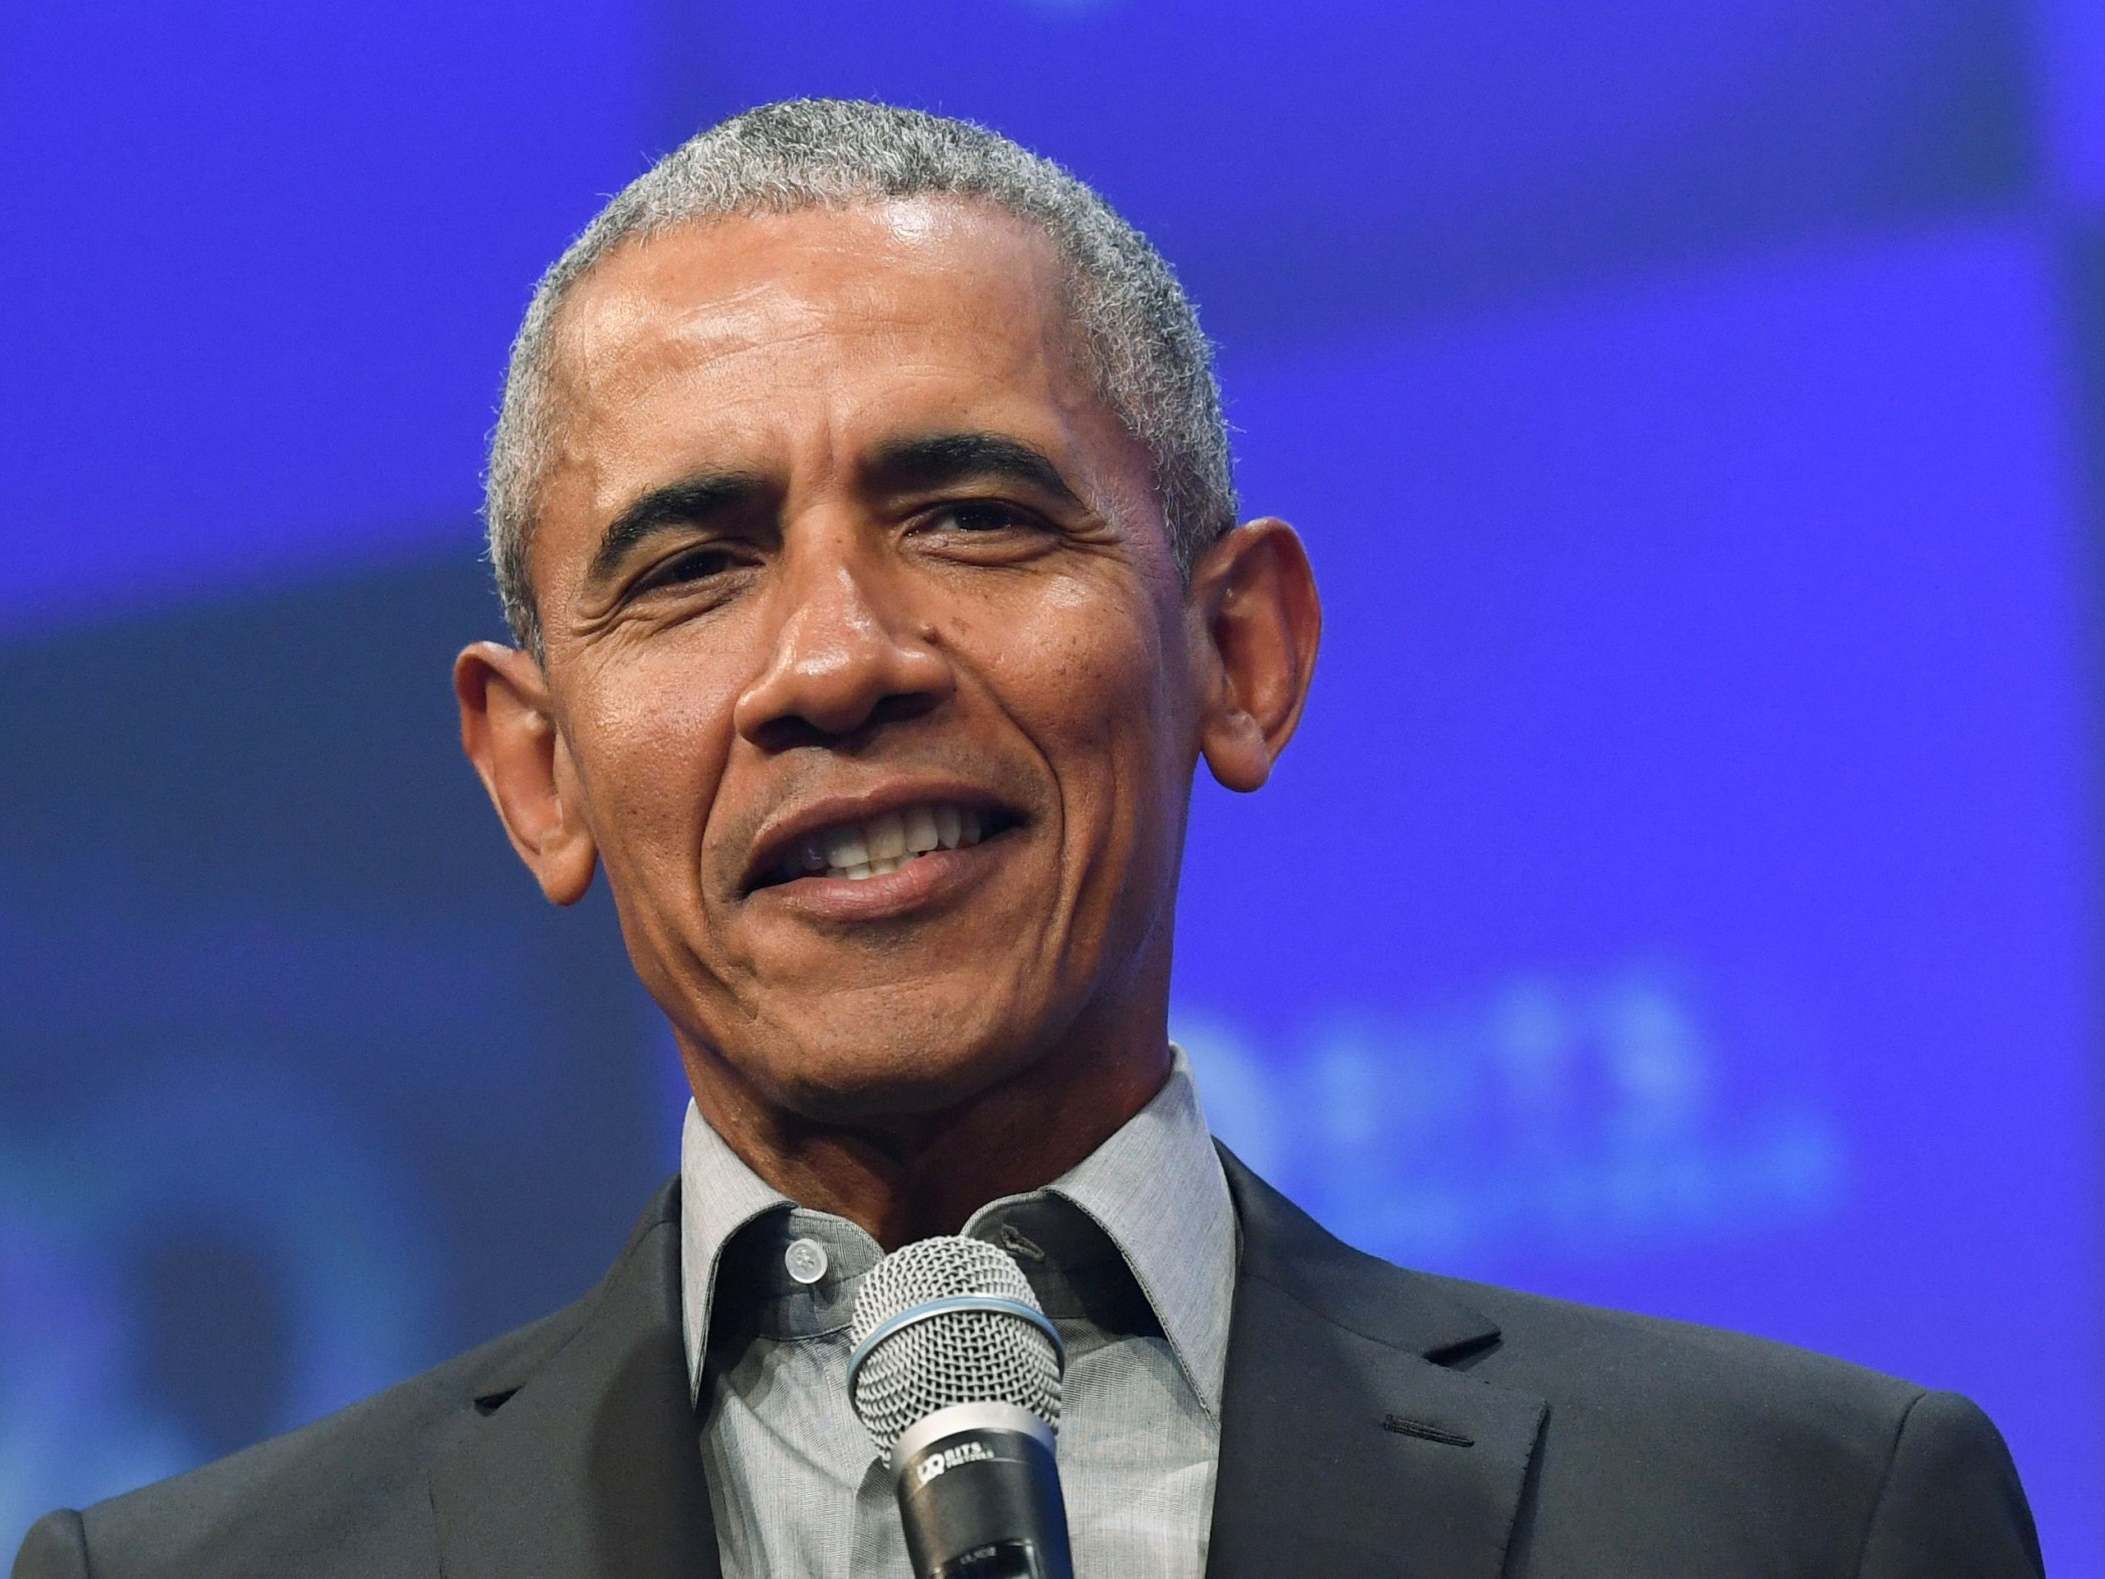 'Speak the truth': Obama calls for plain-speaking politics amid coronavirus